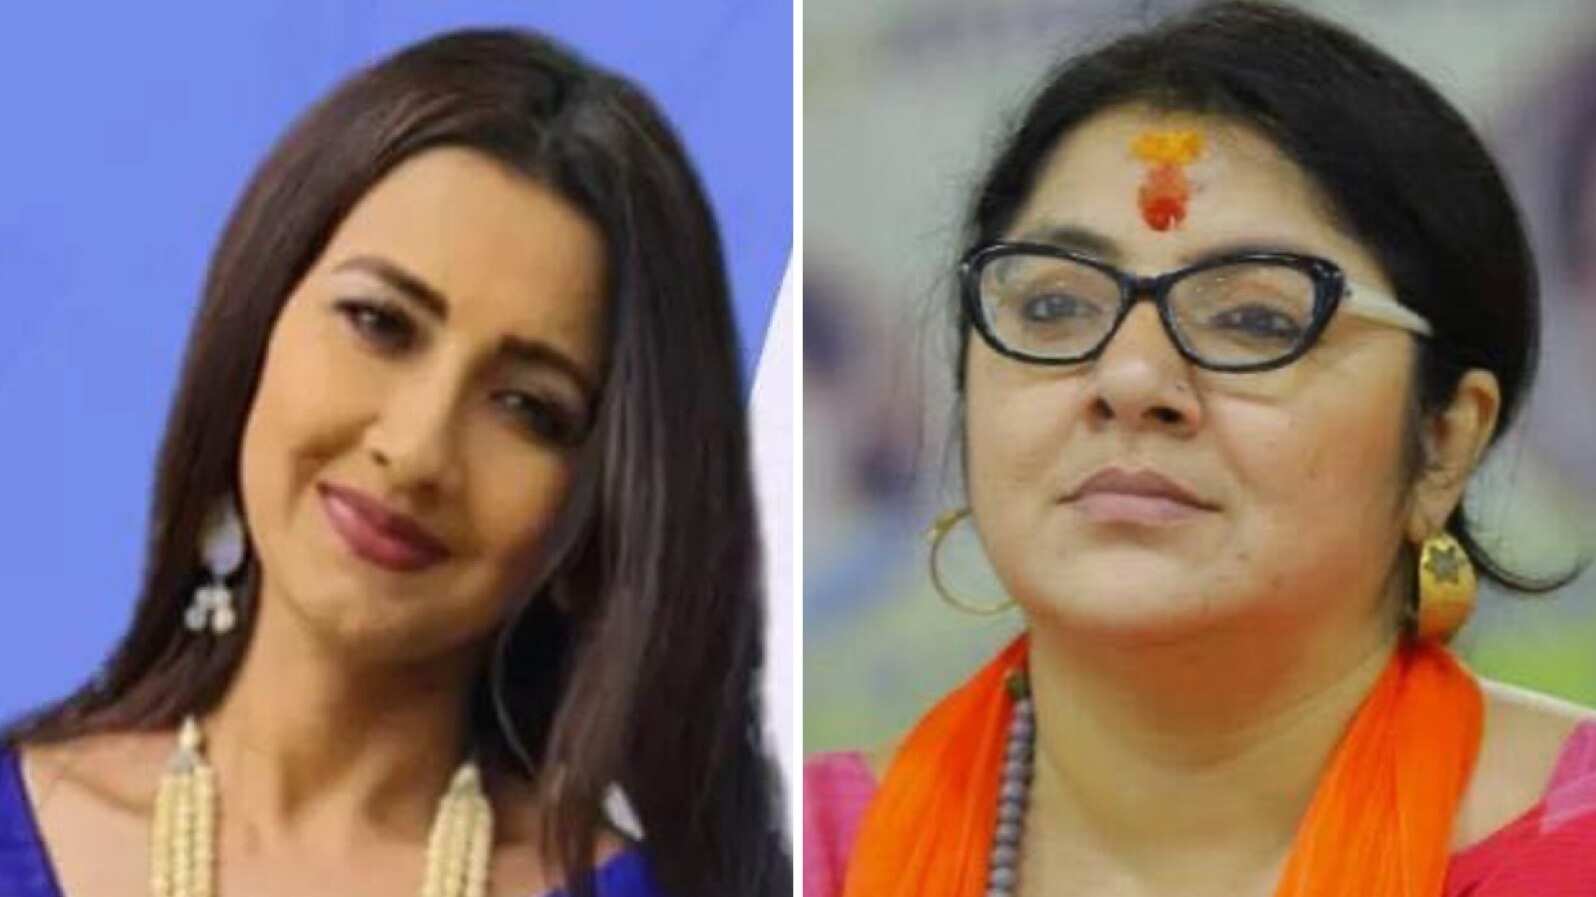 https://www.mobilemasala.com/film-gossip/Rachna-Banerjee-and-Locket-Chatterjee-bid-farewell-to-makeup-during-the-poll-season-i229680